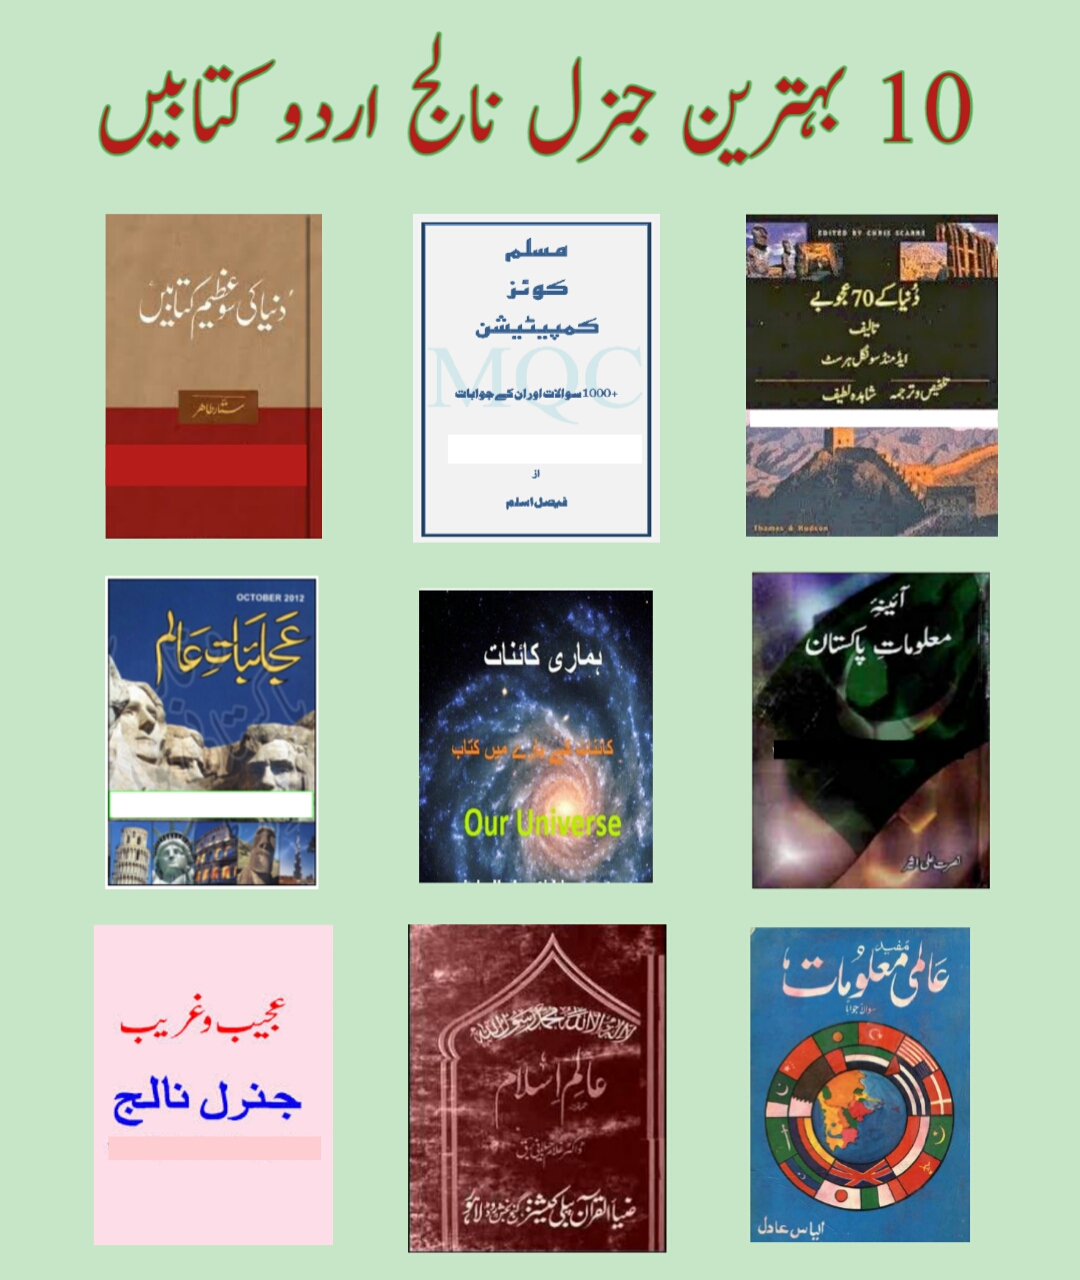 10 Best general knowledge books in pakistan pdf Free Download - Best